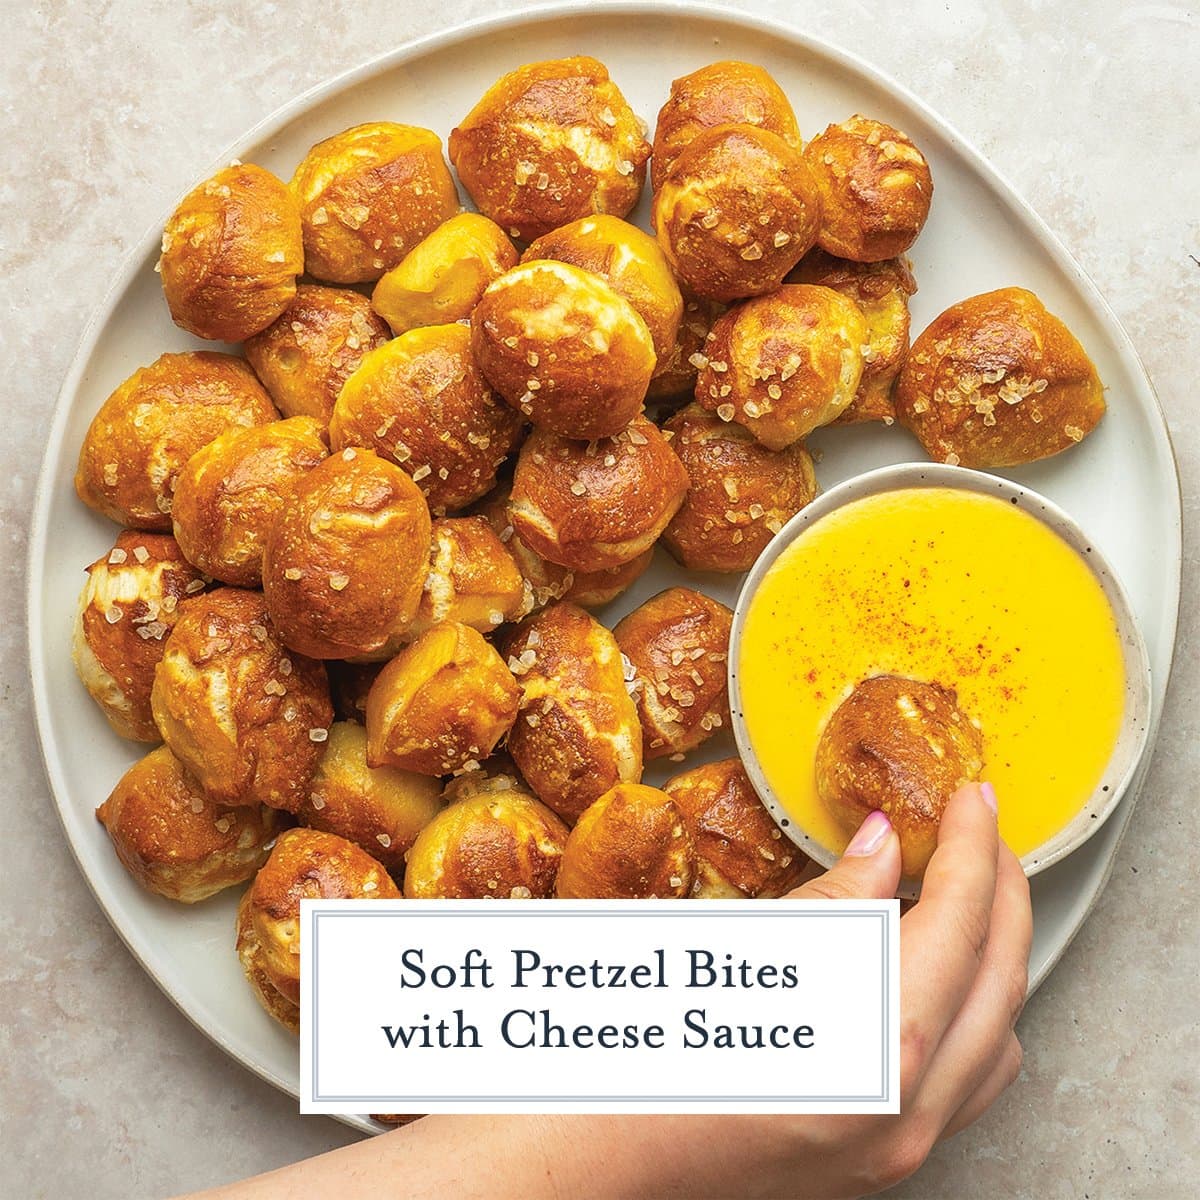 Soft Pretzel Bites with Cheese Sauce